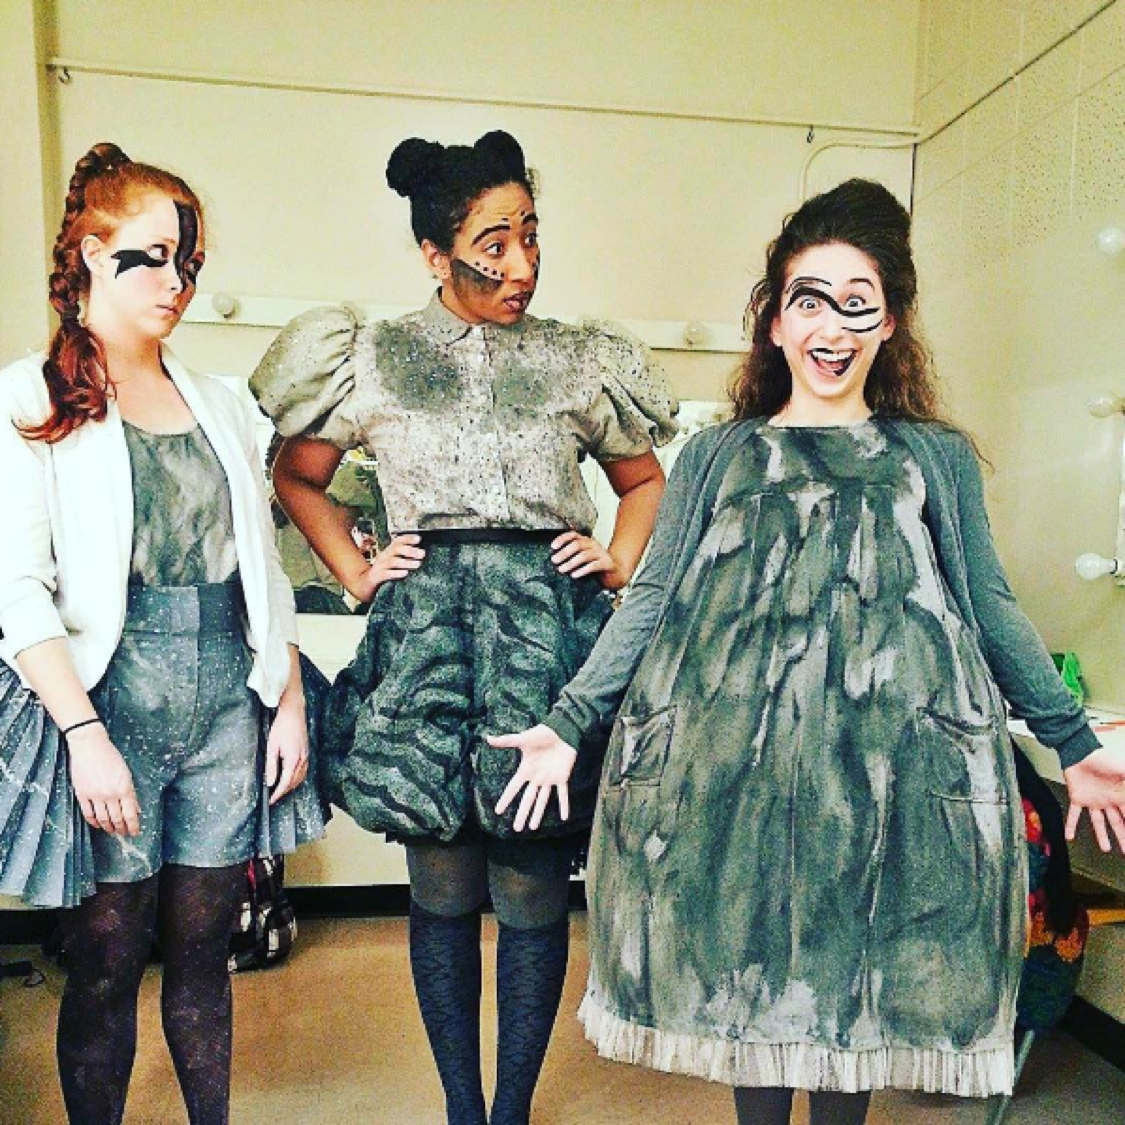 Meet the @theatreubc #eurydice ladies. #sassy #澳门二四六天天彩 #ubcartsculture #theatreubc #stagecrew #backstage #ubcfun